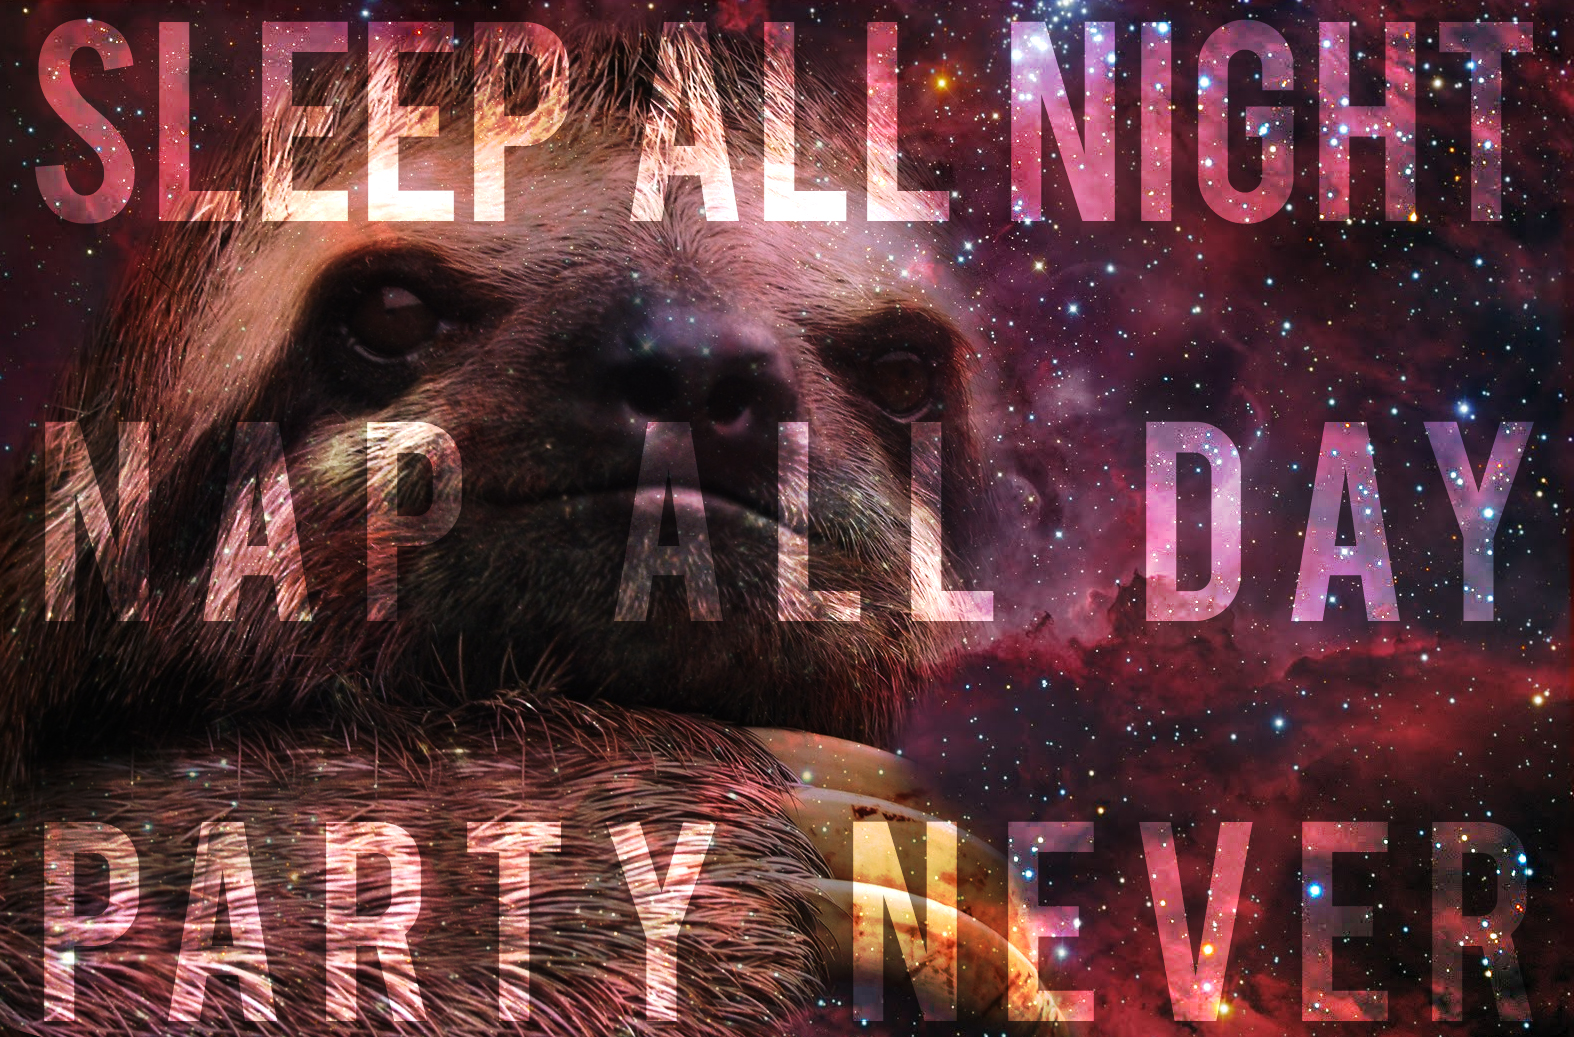 sloths are still relevant